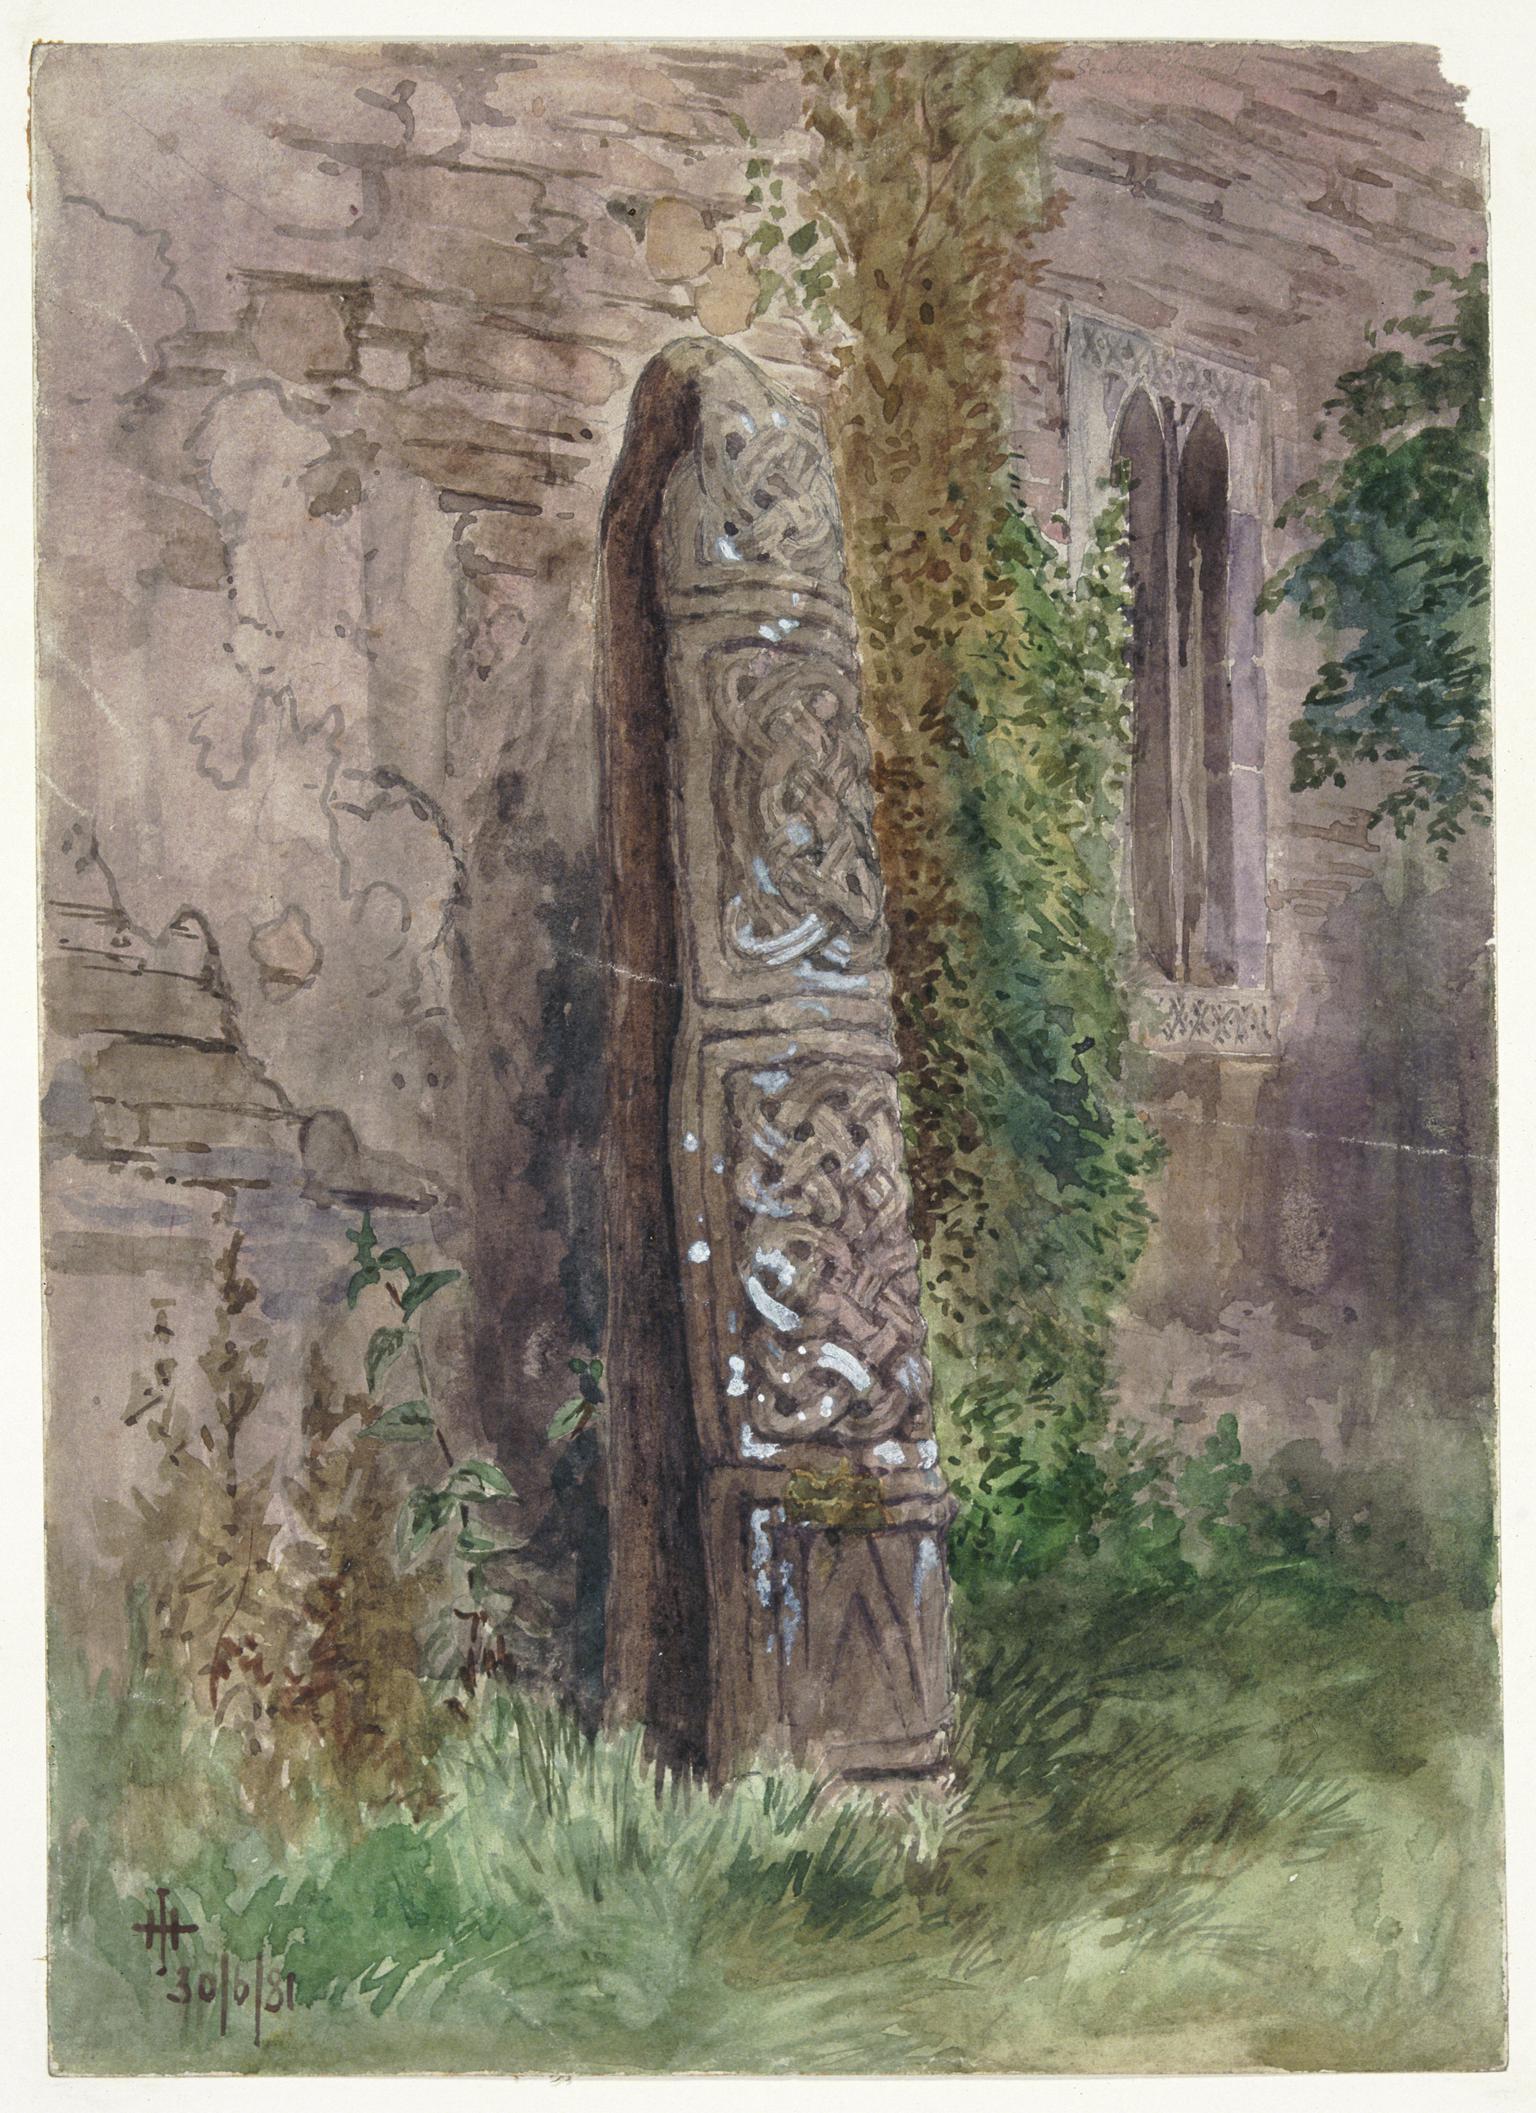 Carved stone, Llantwit Major